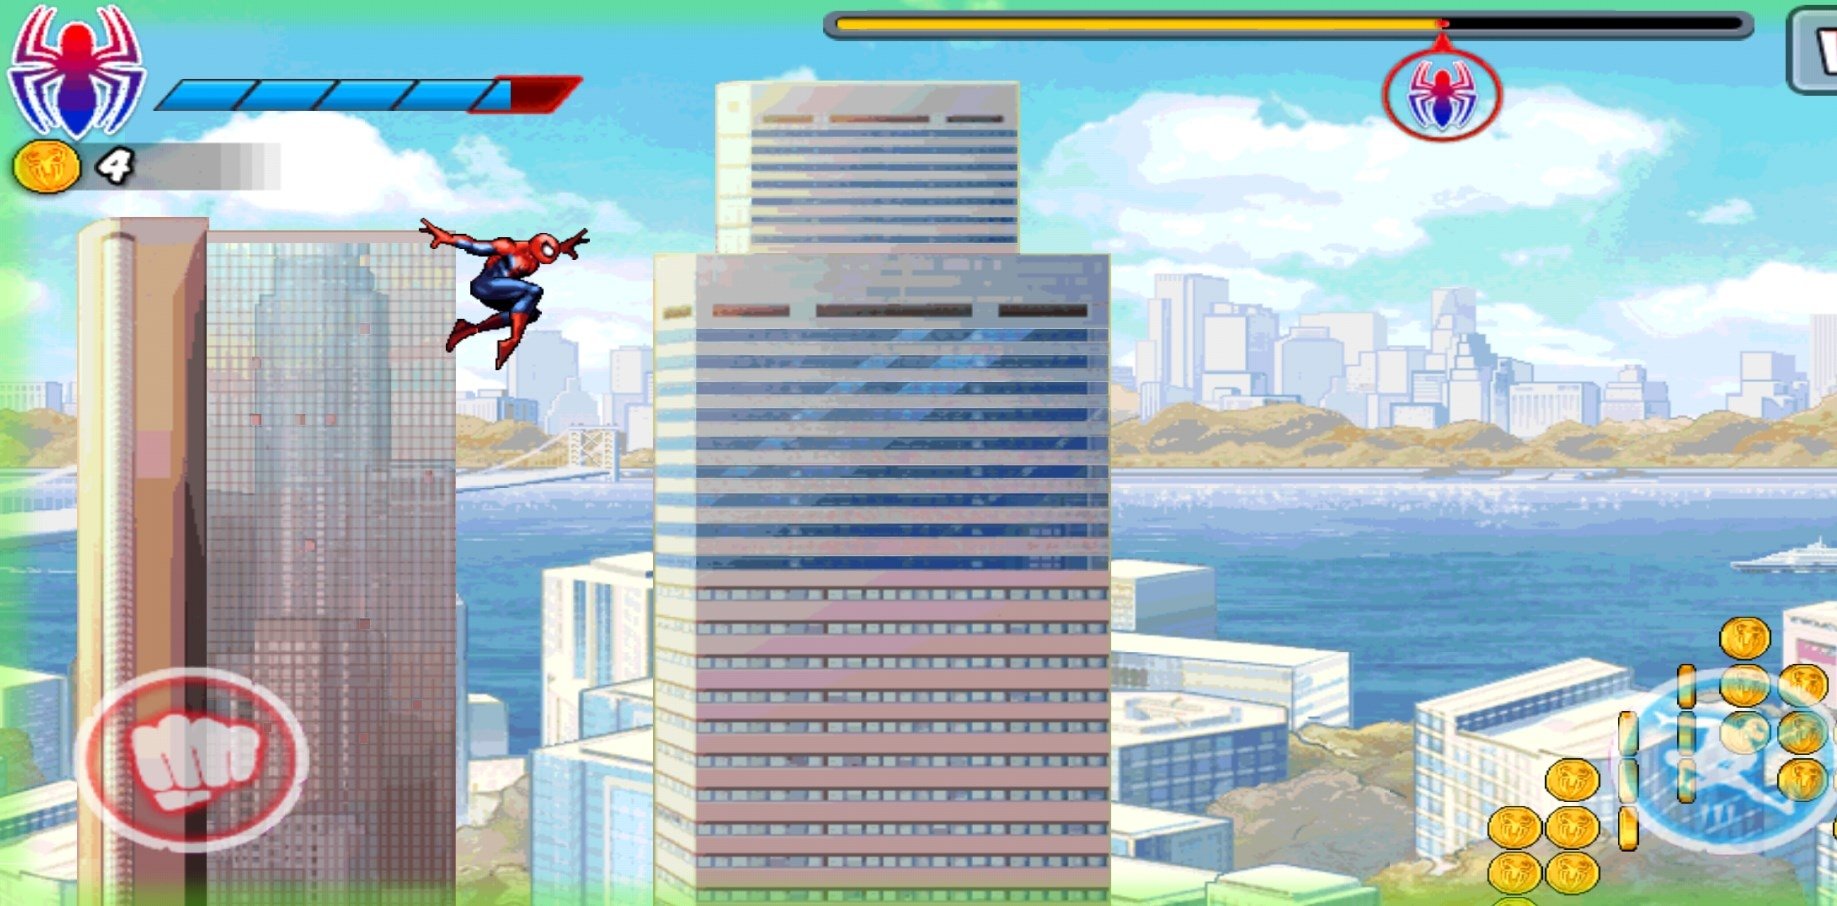 Spider Man Ultimate Power APK